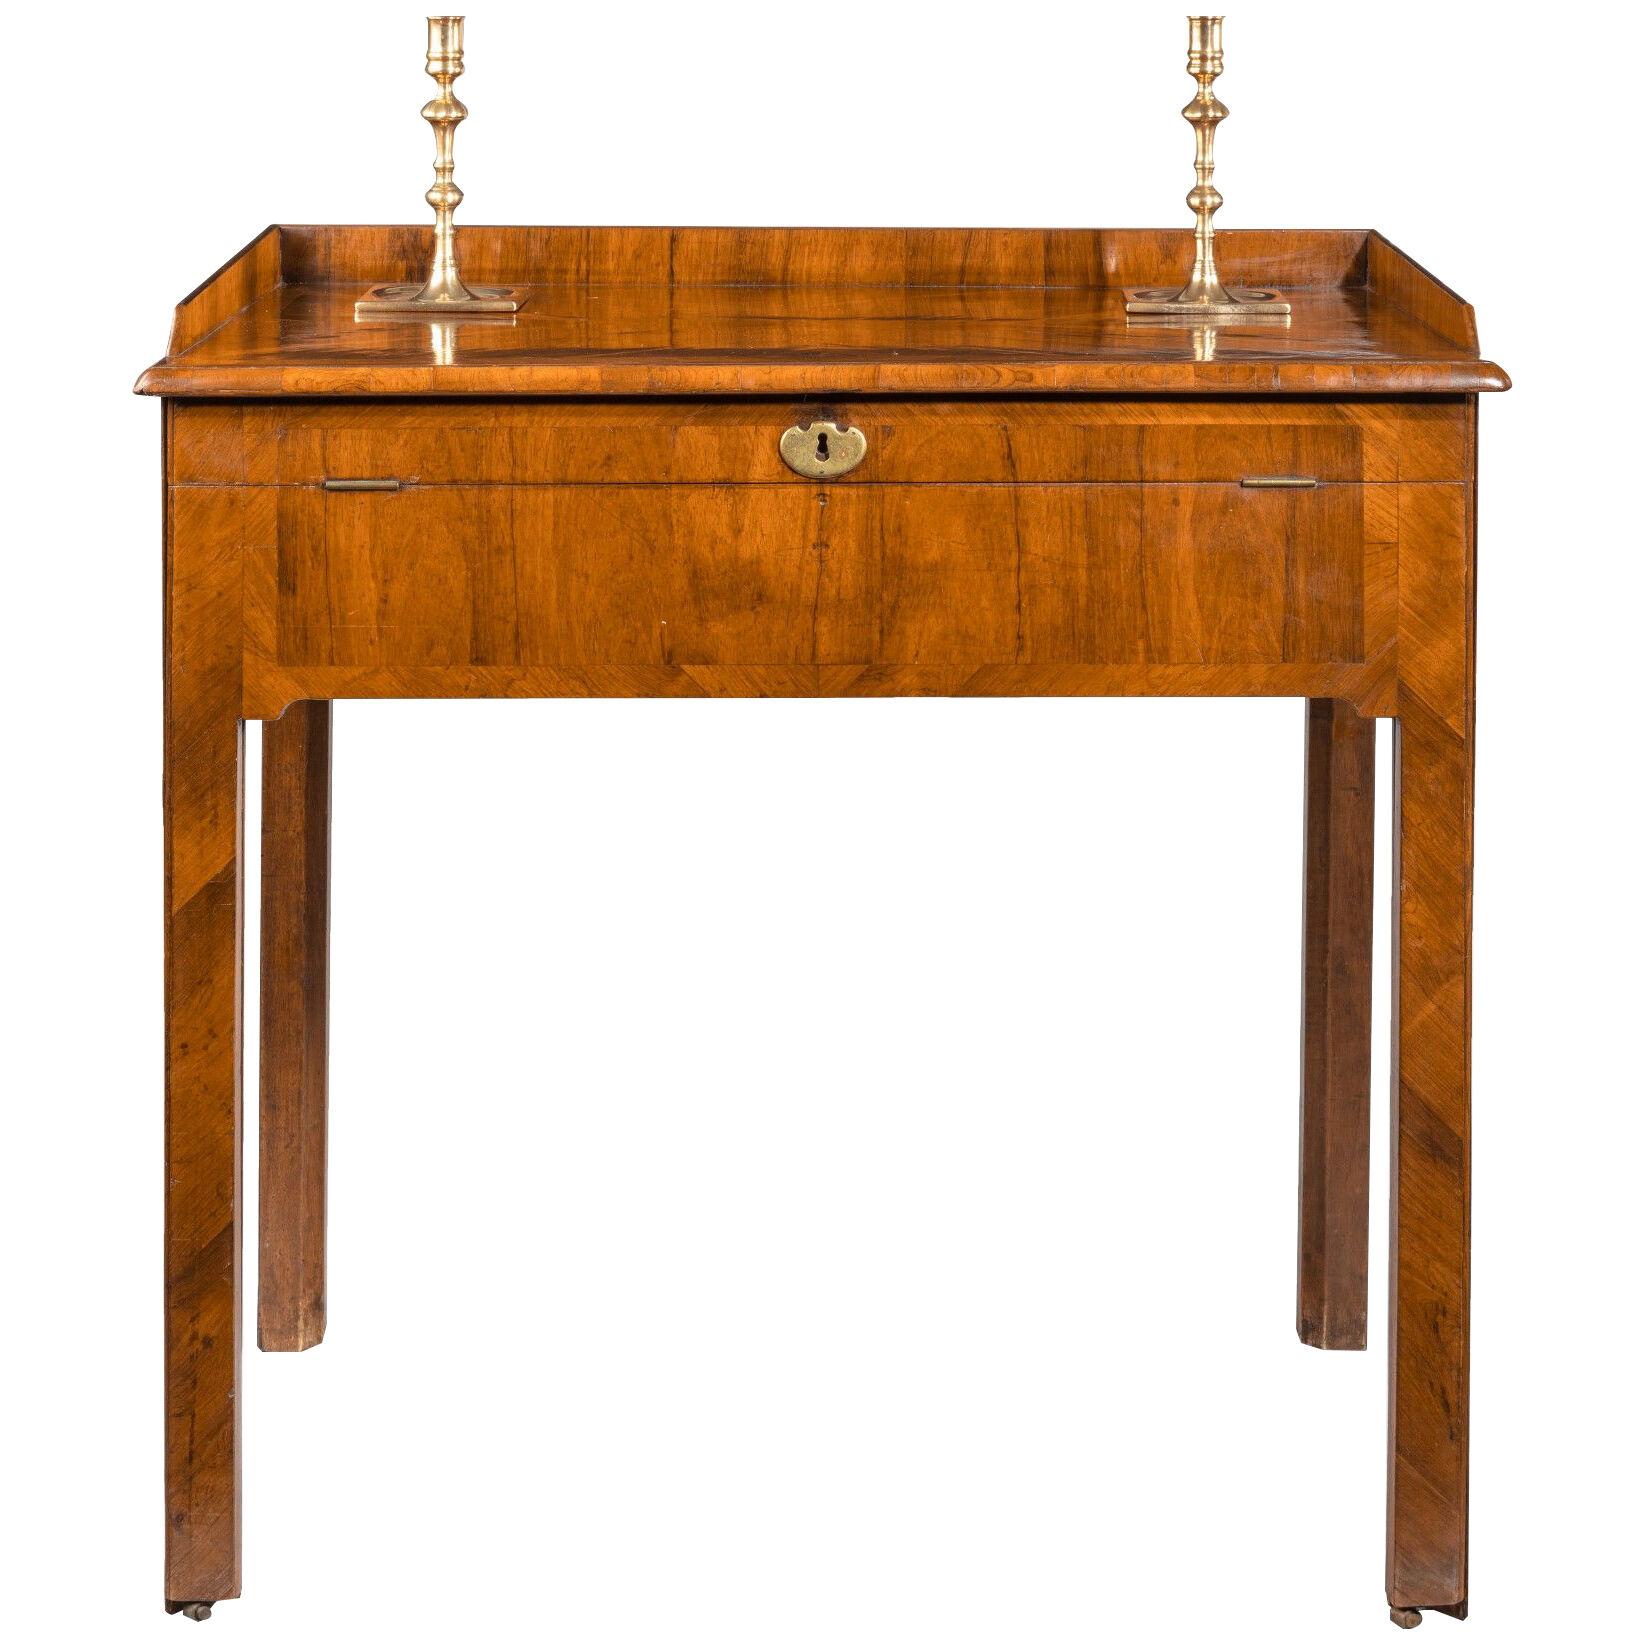 George II kingwood drawing table